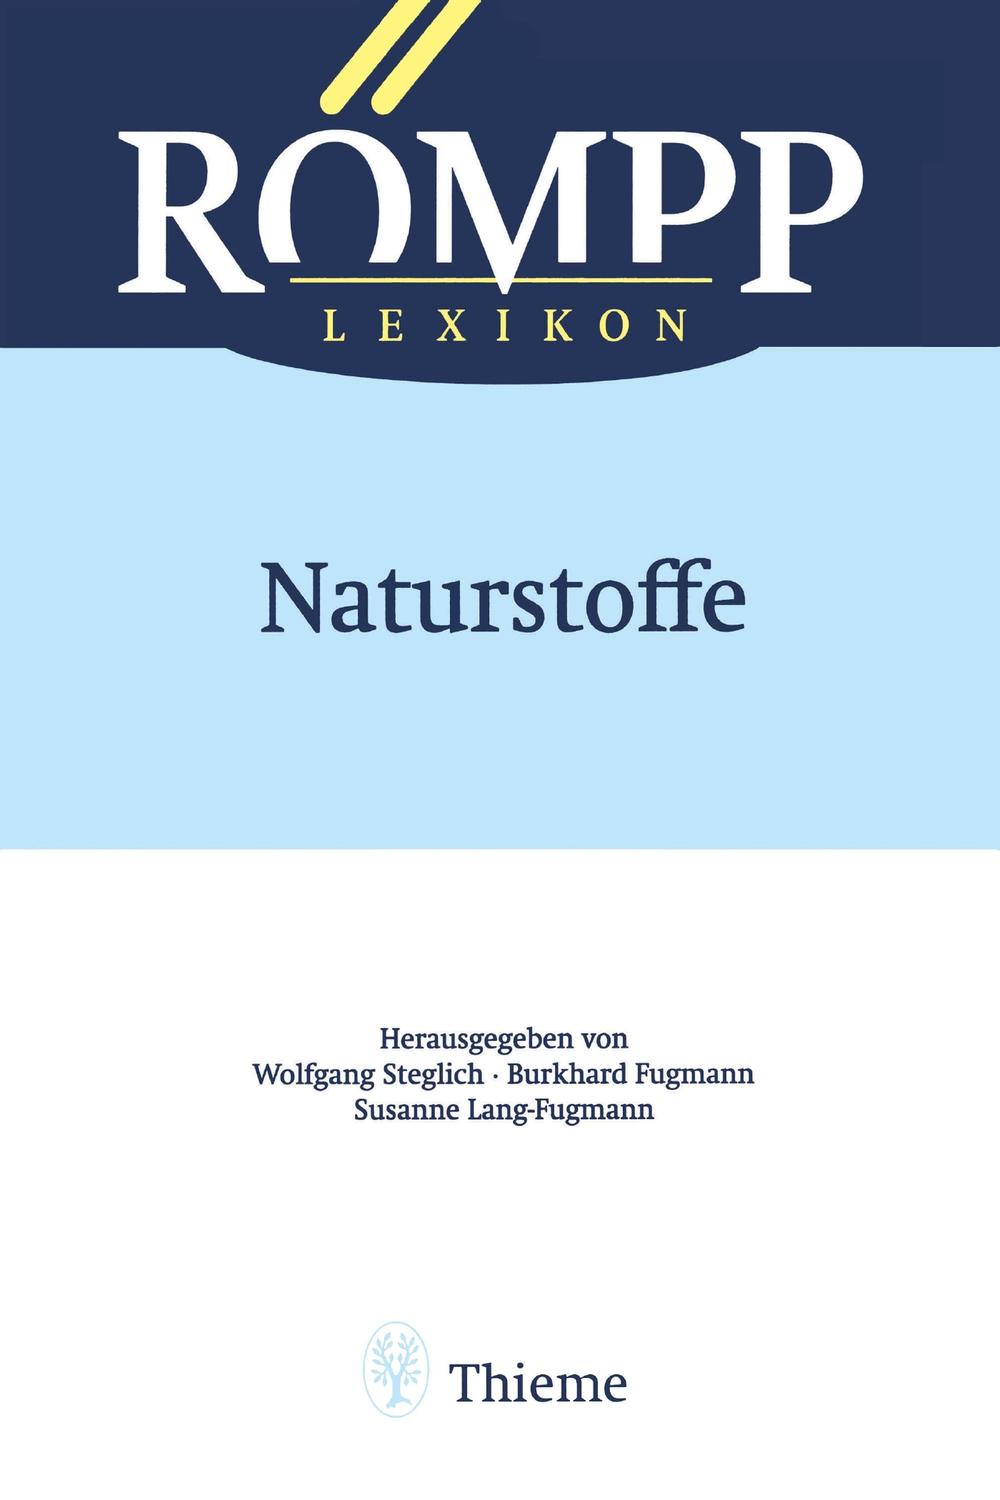 RÖMPP Lexikon Naturstoffe, 1. Auflage, 1997 - Burkhard Fugmann